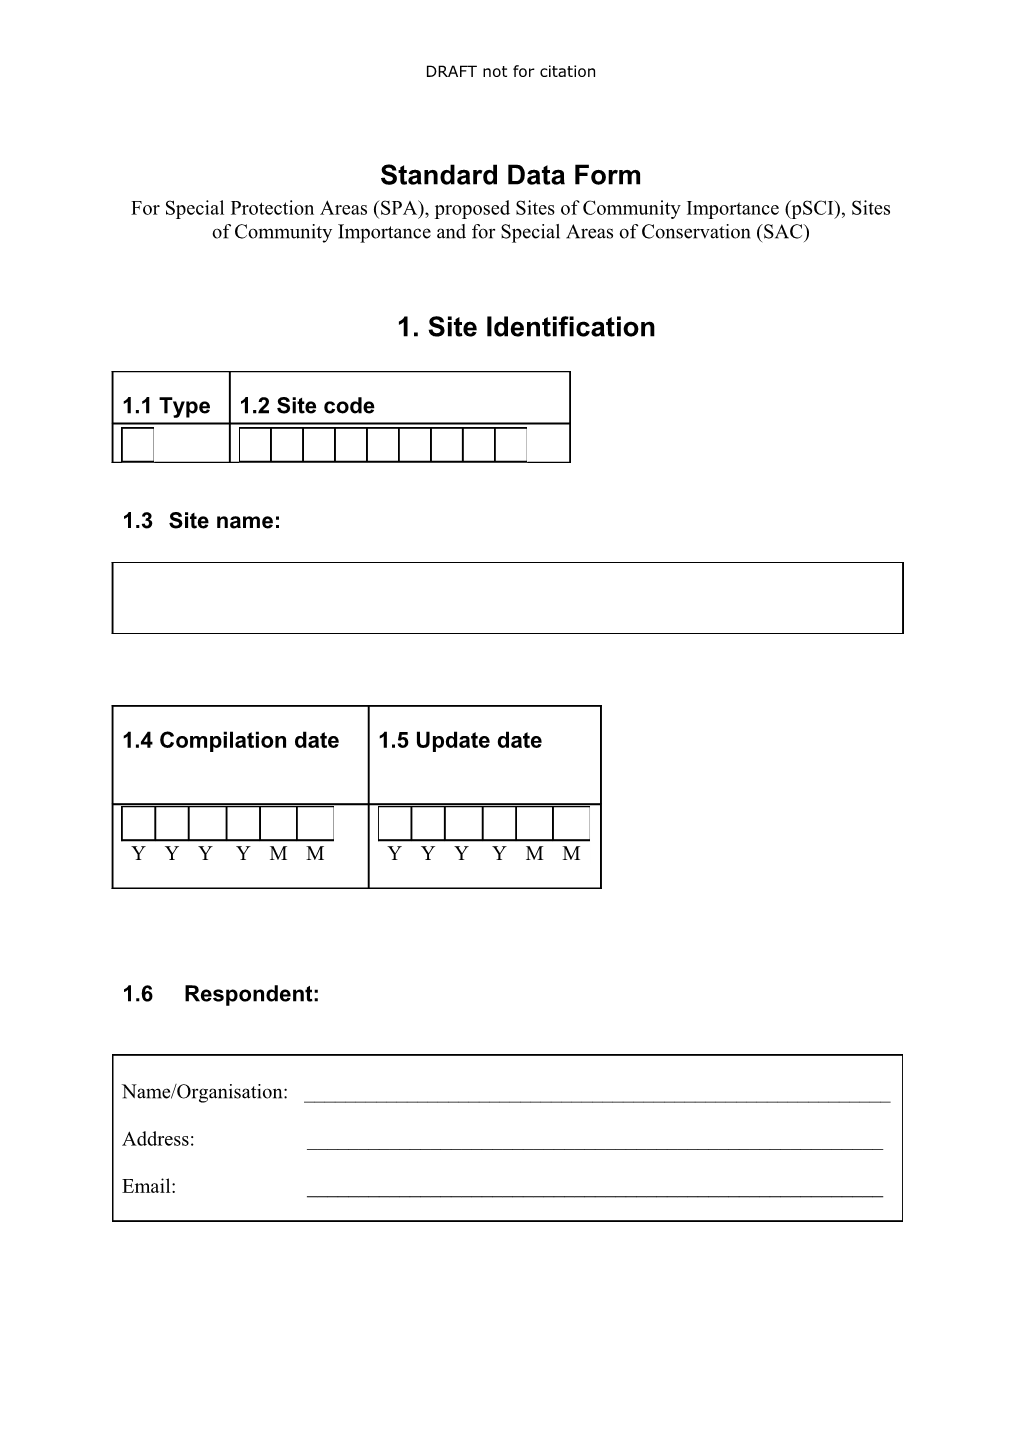 Standard Data Form